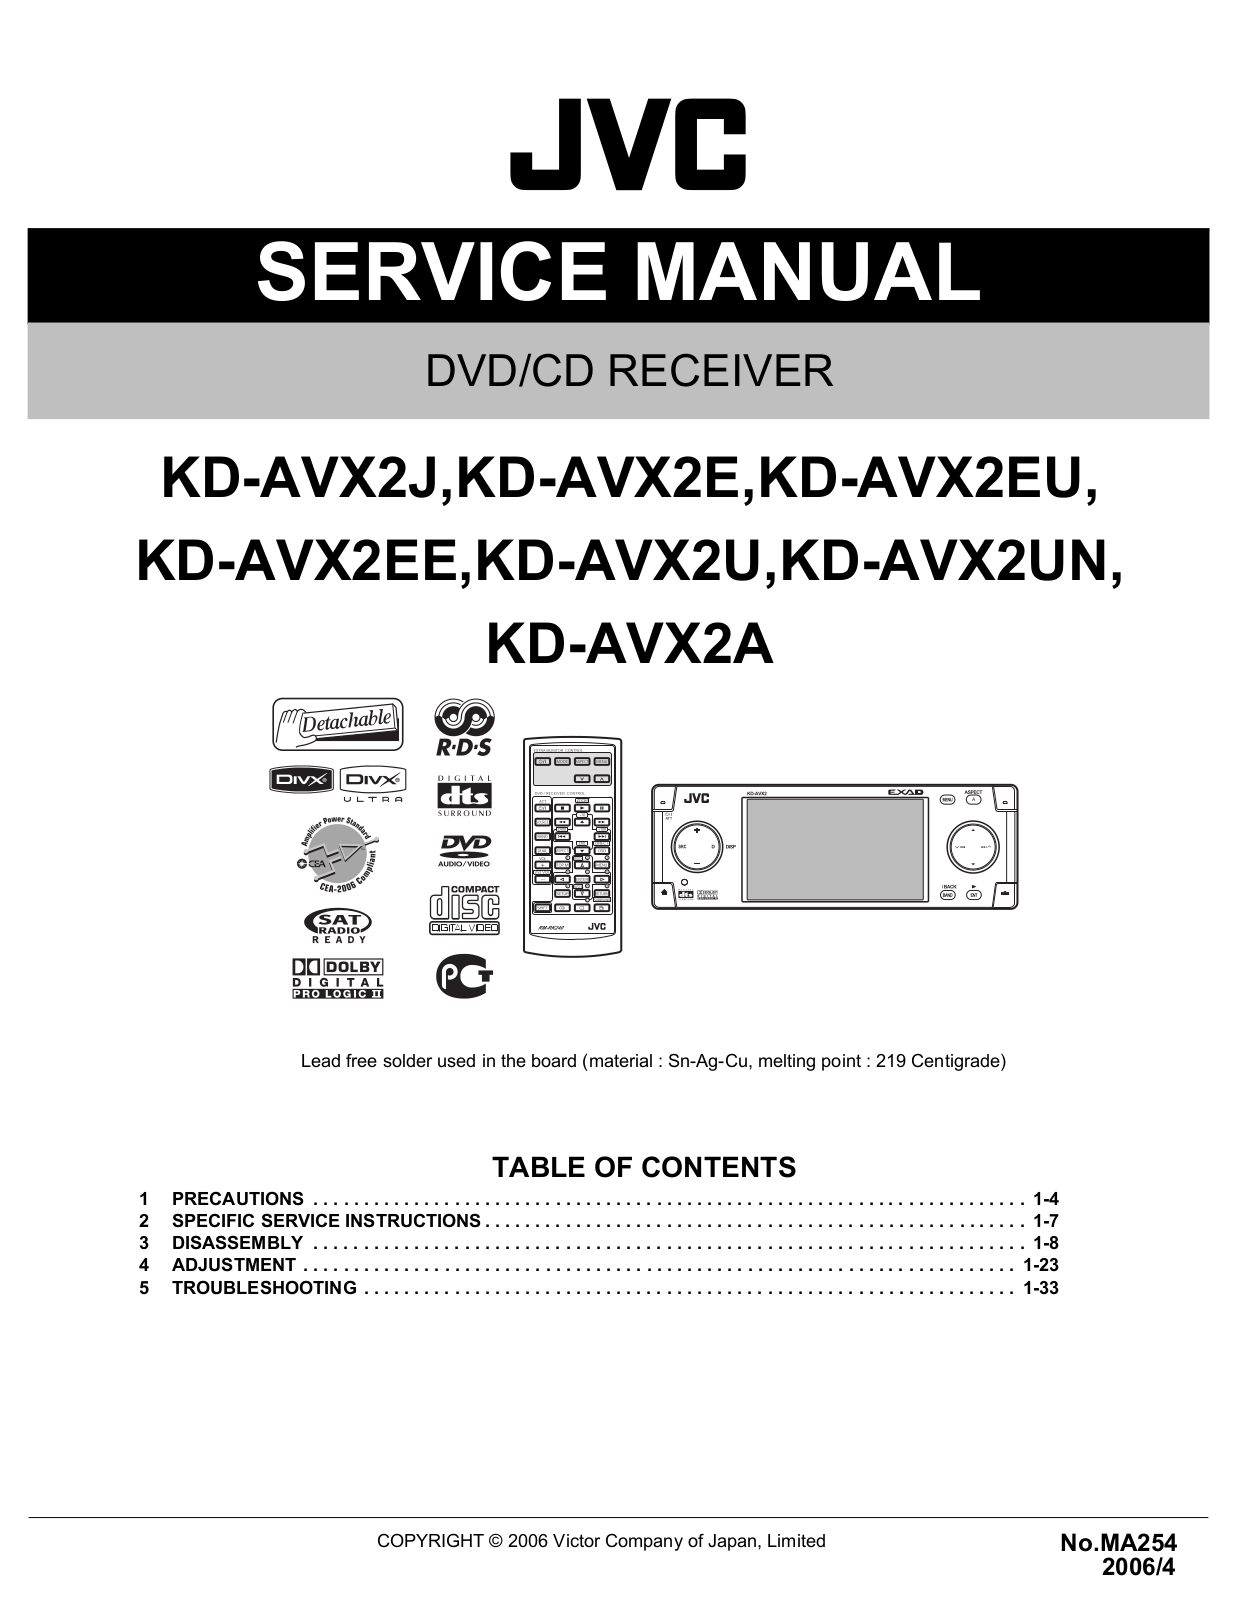 Jvc KD-AVX-2-U, KD-AVX-2-J, KD-AVX-2-EU, KD-AVX-2-UN Service Manual